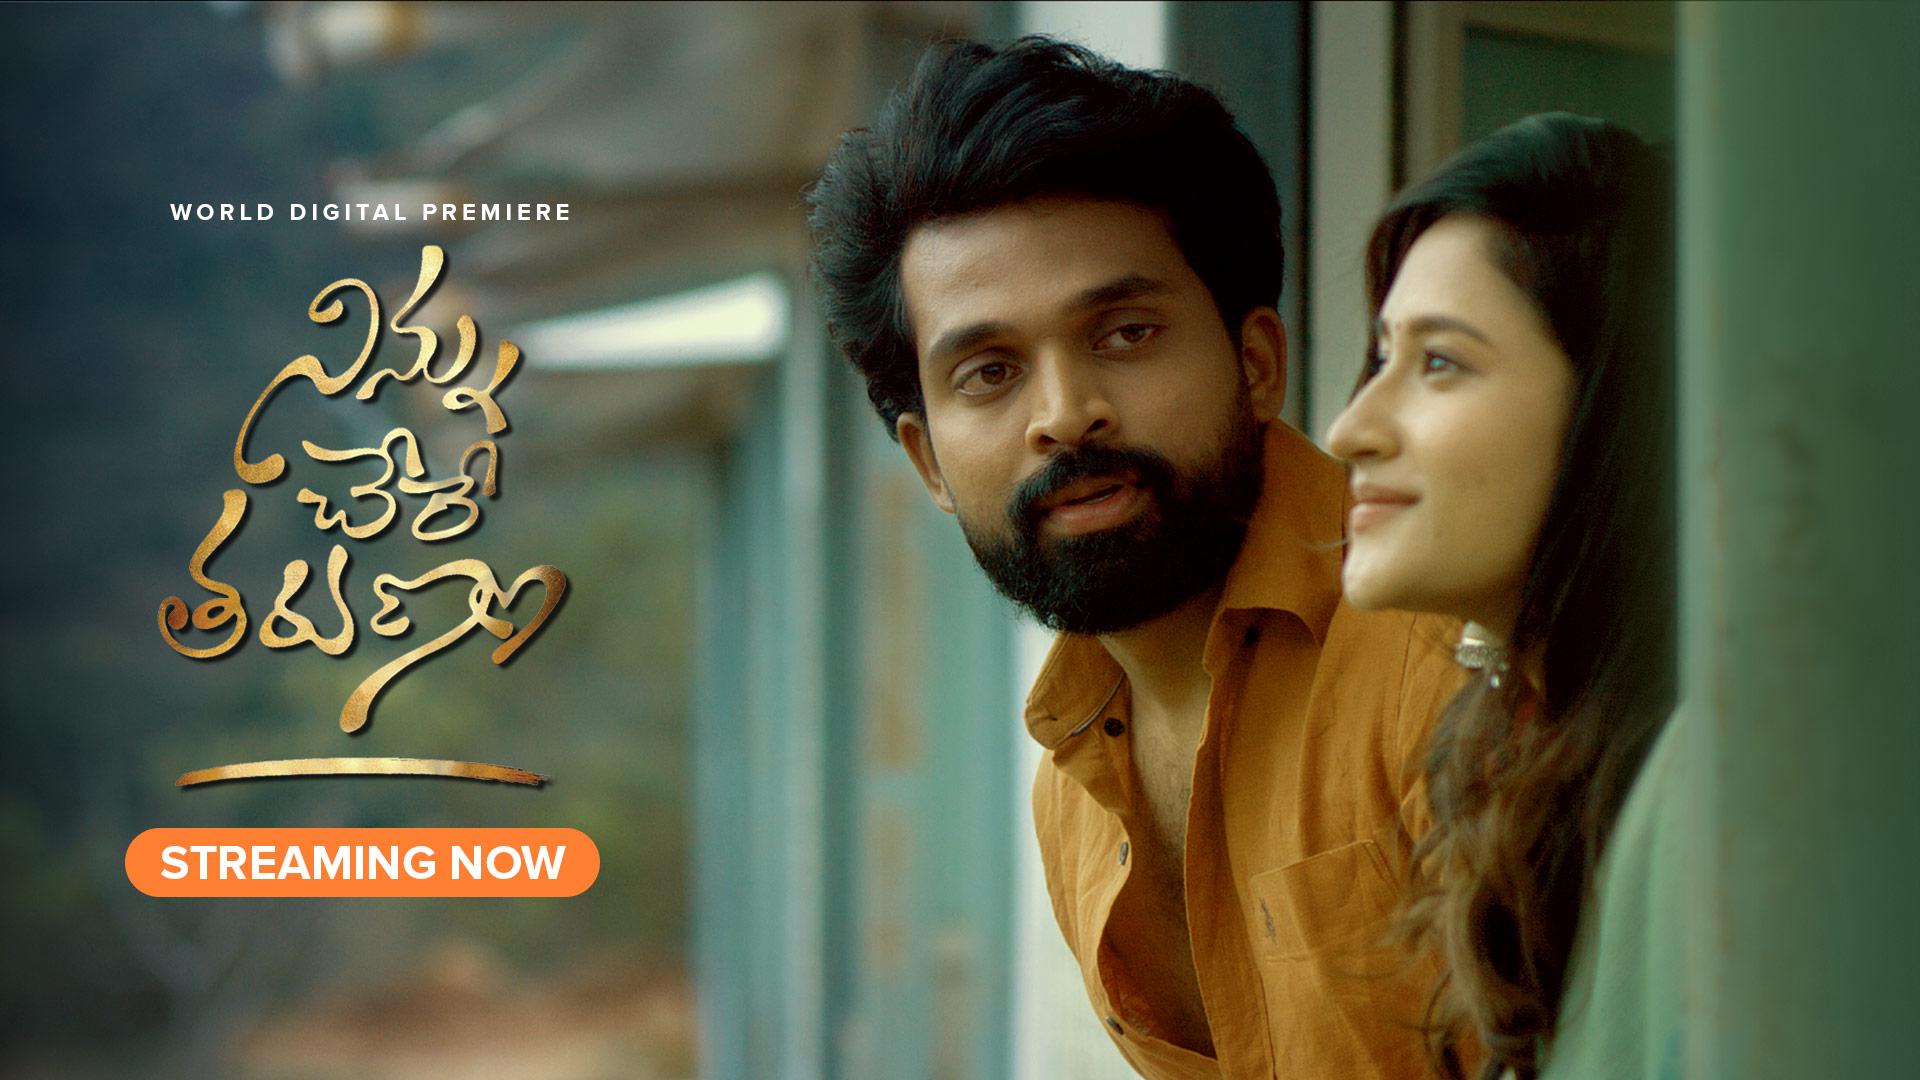 Watch Ninnu Chere Tharunam (Telugu) Full Movie Online - Download Now